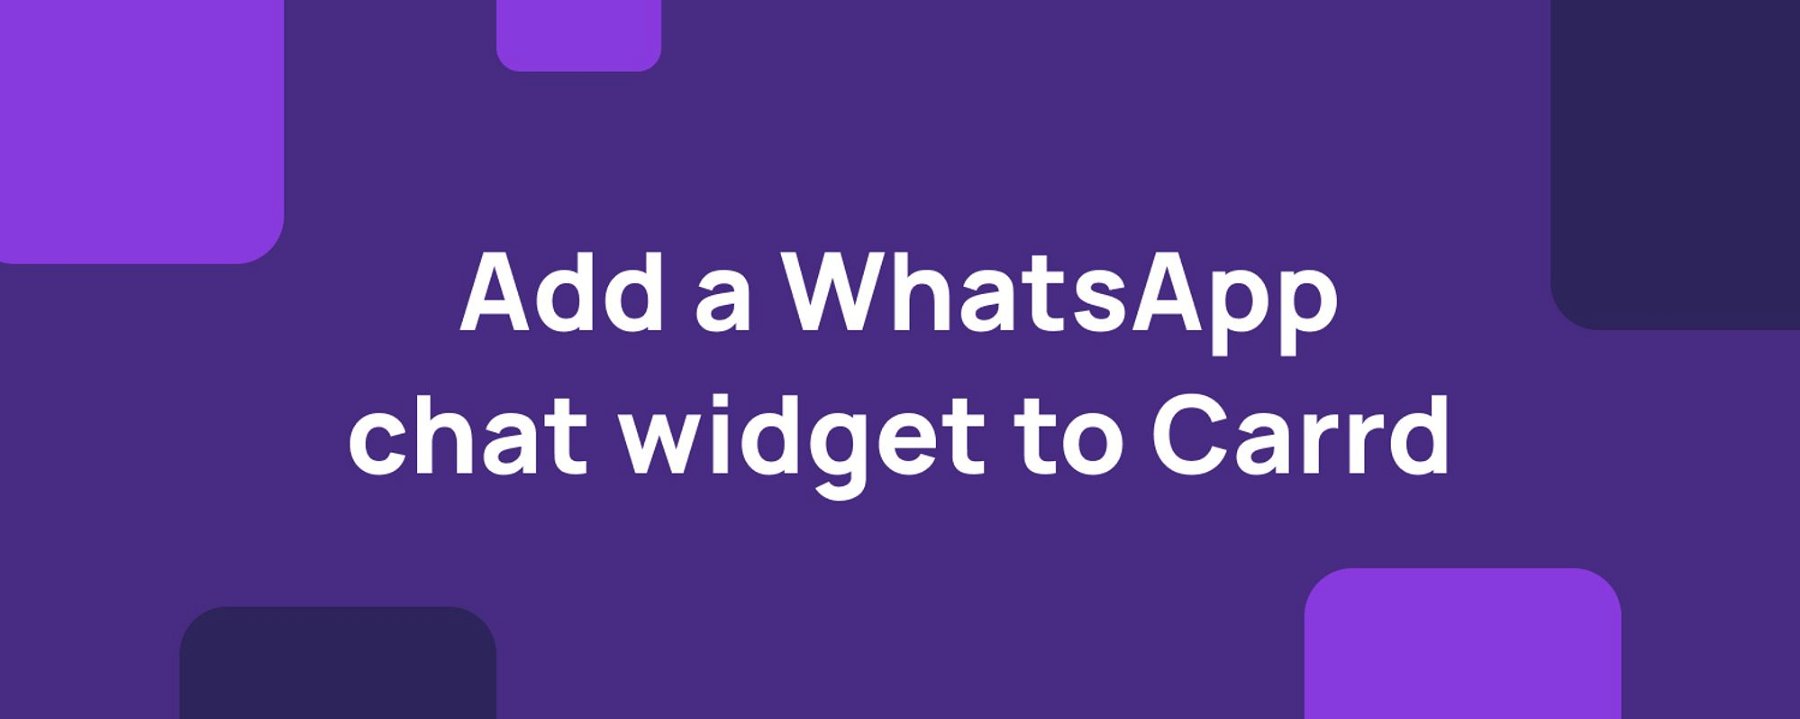 Add a WhatsApp chat widget to Carrd